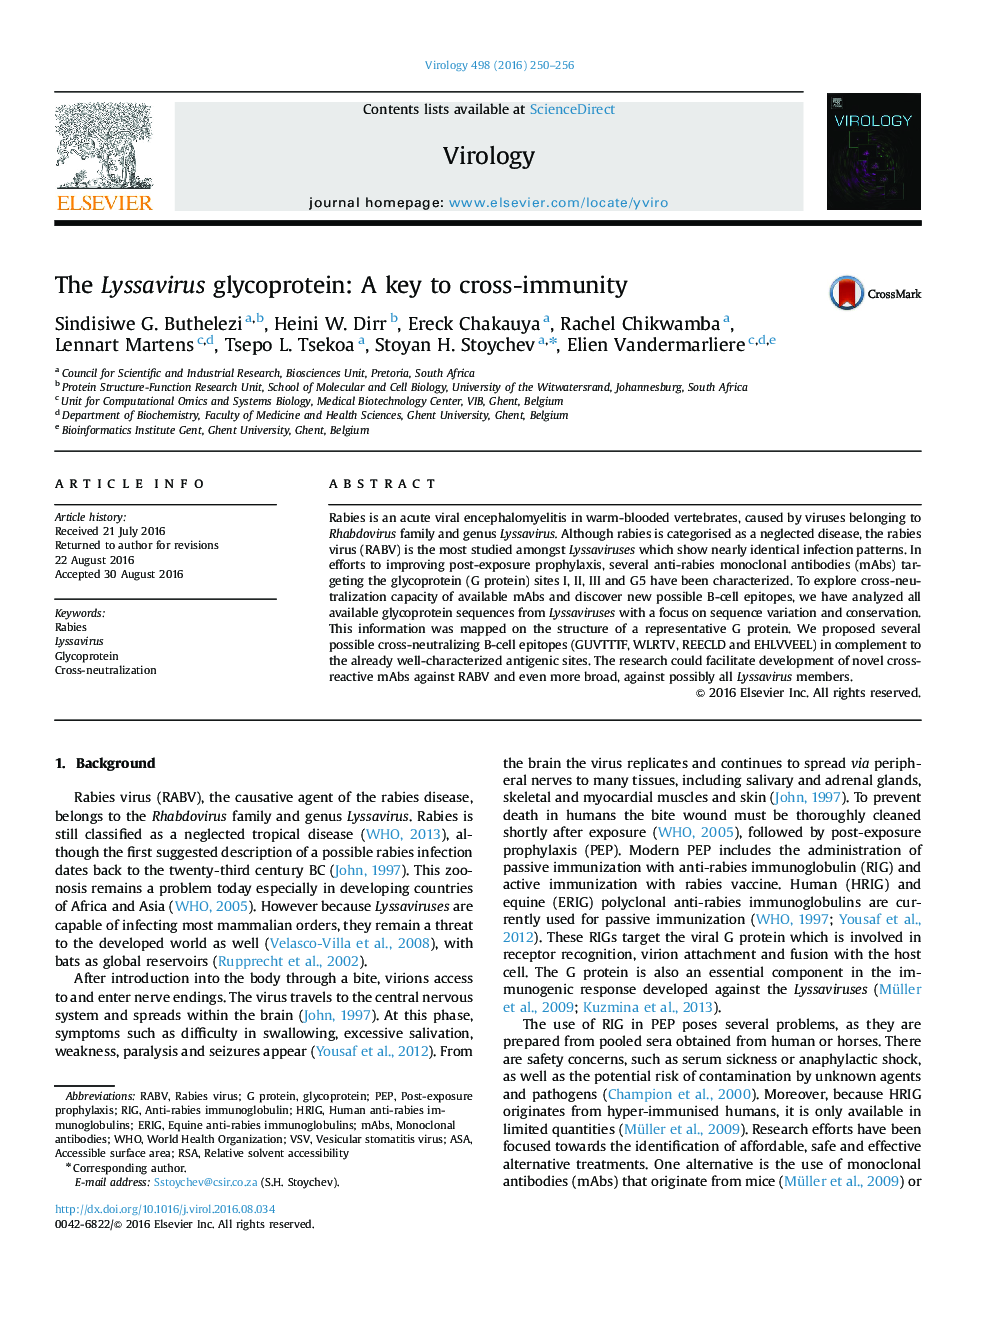 The Lyssavirus glycoprotein: A key to cross-immunity